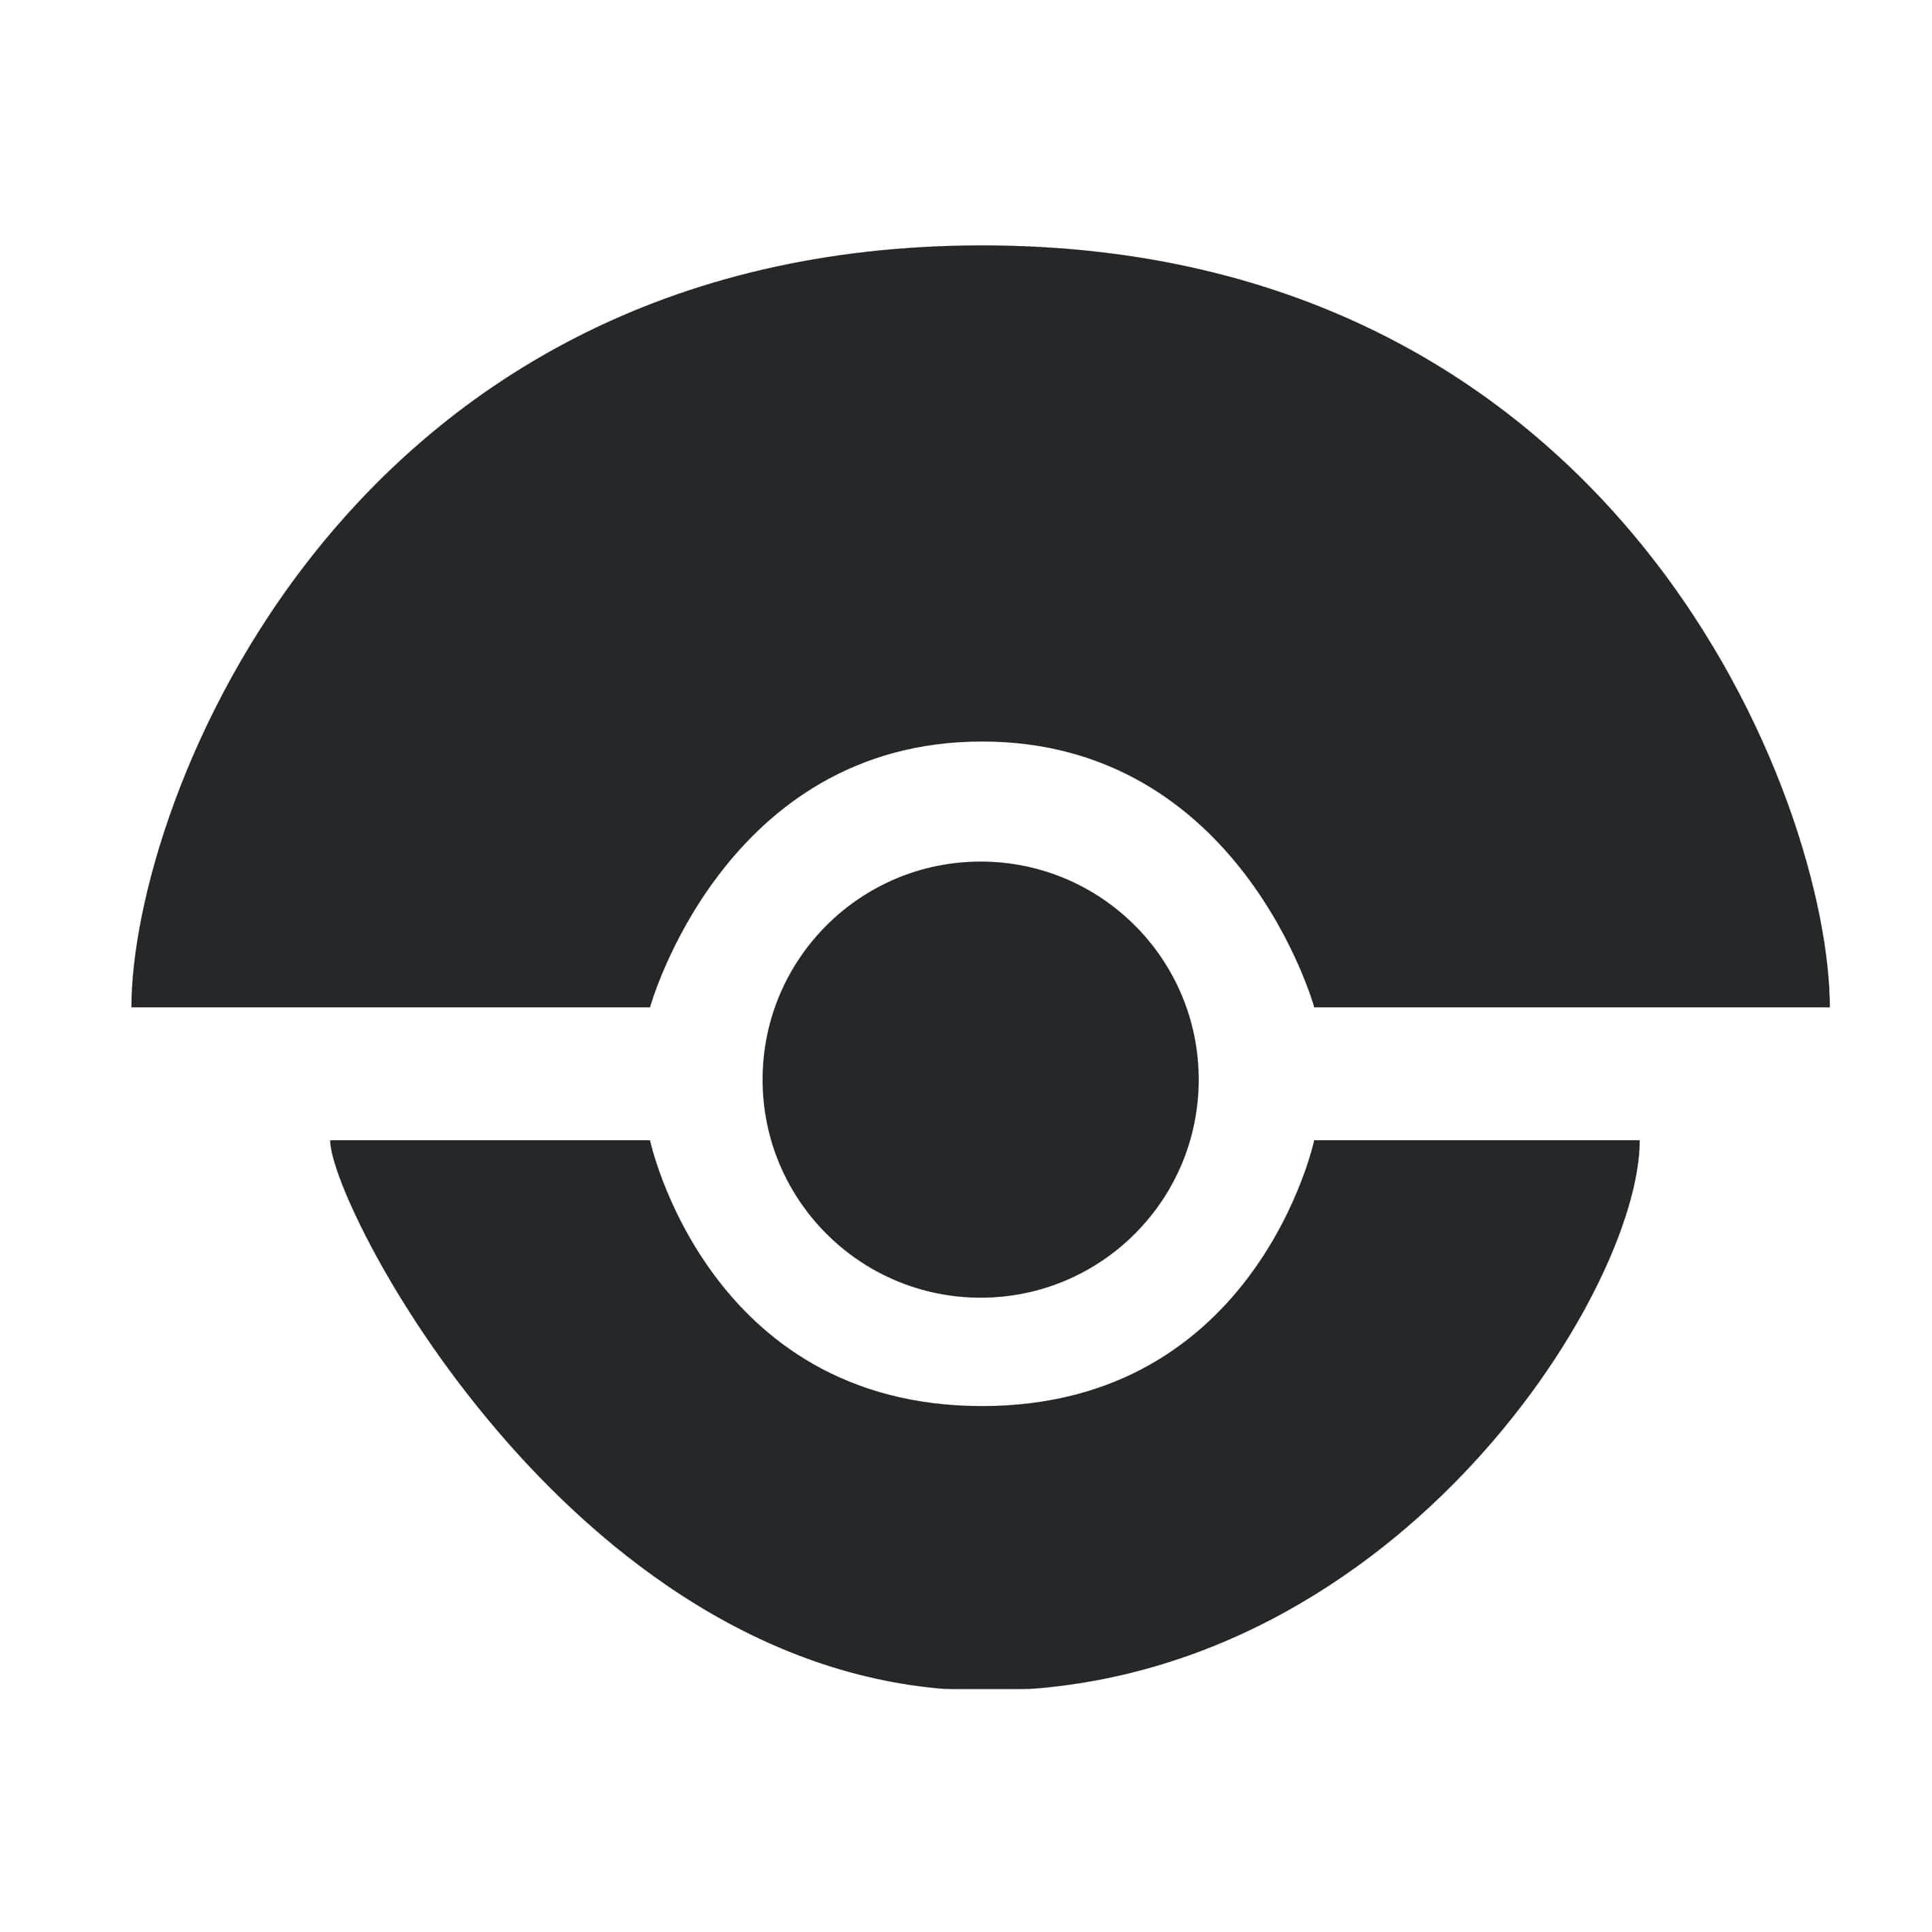 Drone logo